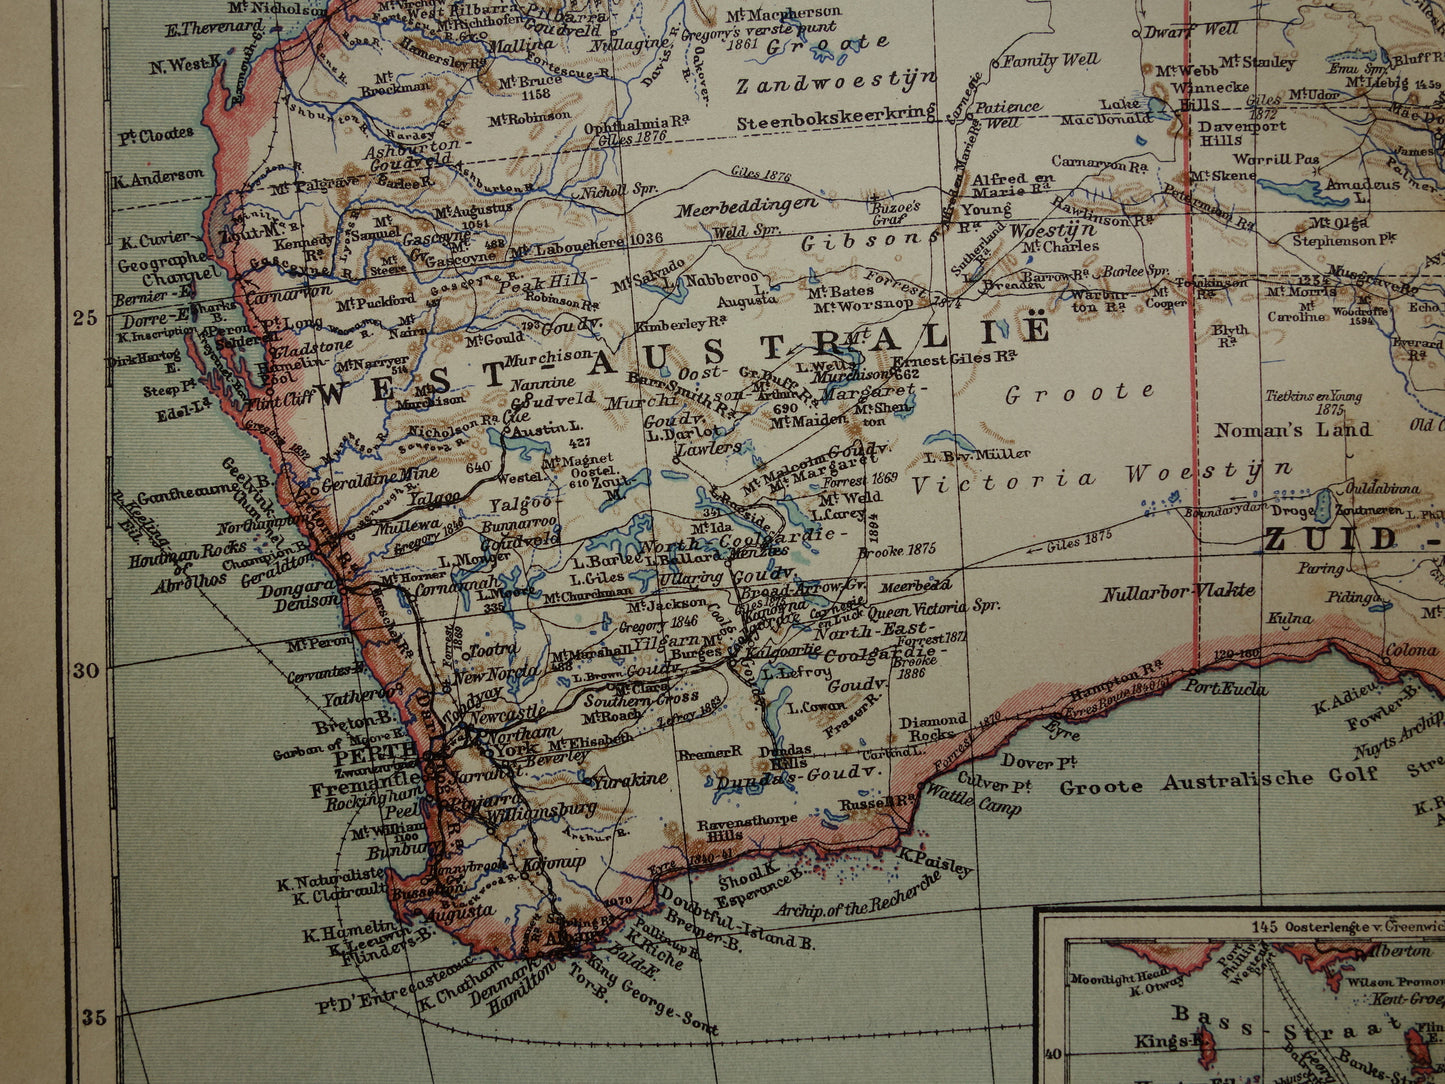 Oude kaart van Australië uit 1905 originele antieke Nederlandse landkaart van Australië vintage kaarten